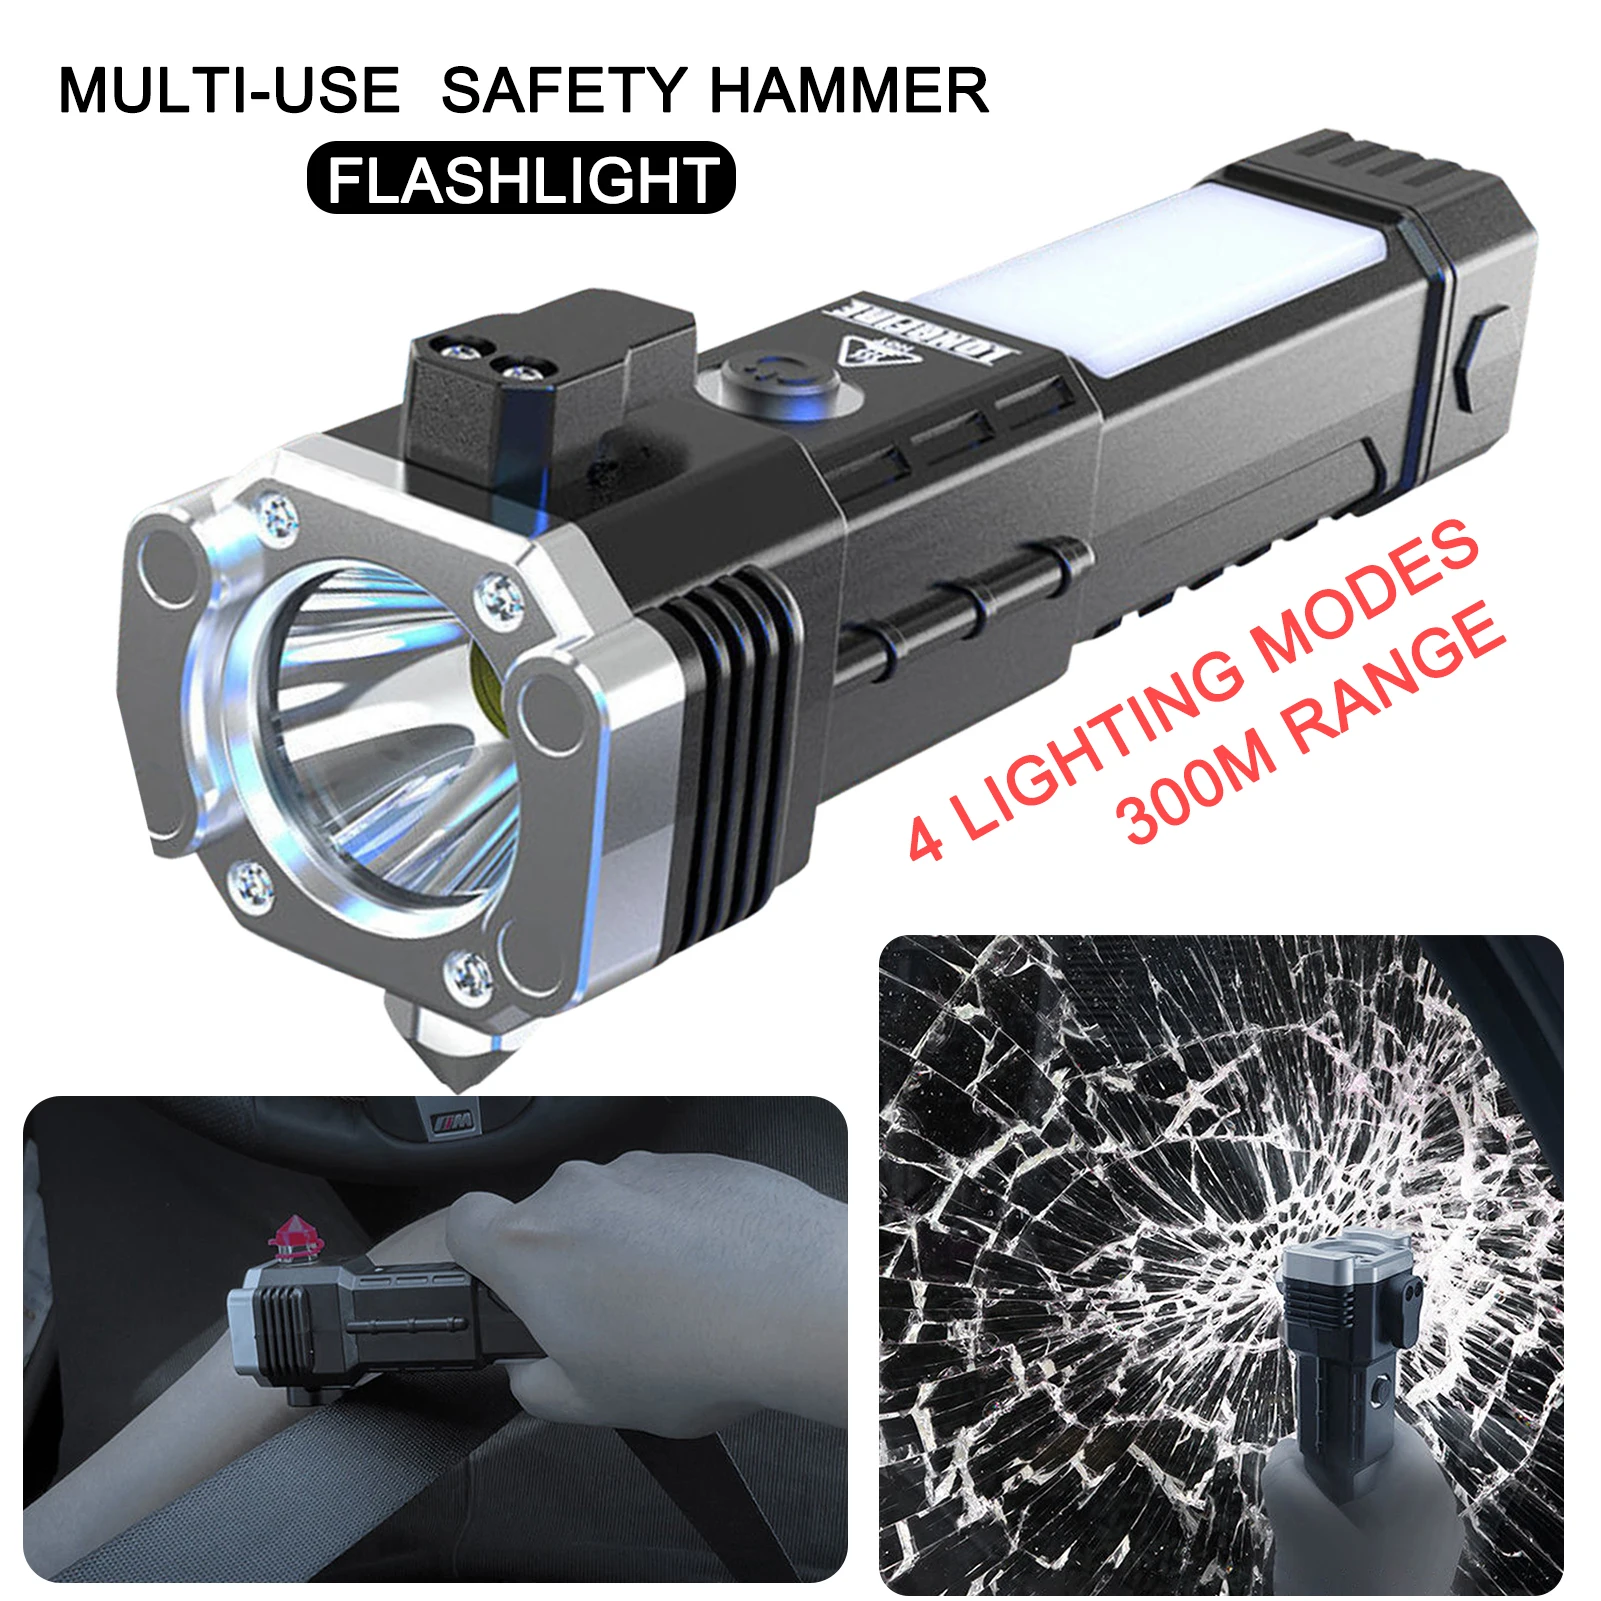 

Car Safety Hammer Flashlight Multi-Use Charging Power Work Light Emergency Fire Self-rescue Breaking Window Car Escape Tool